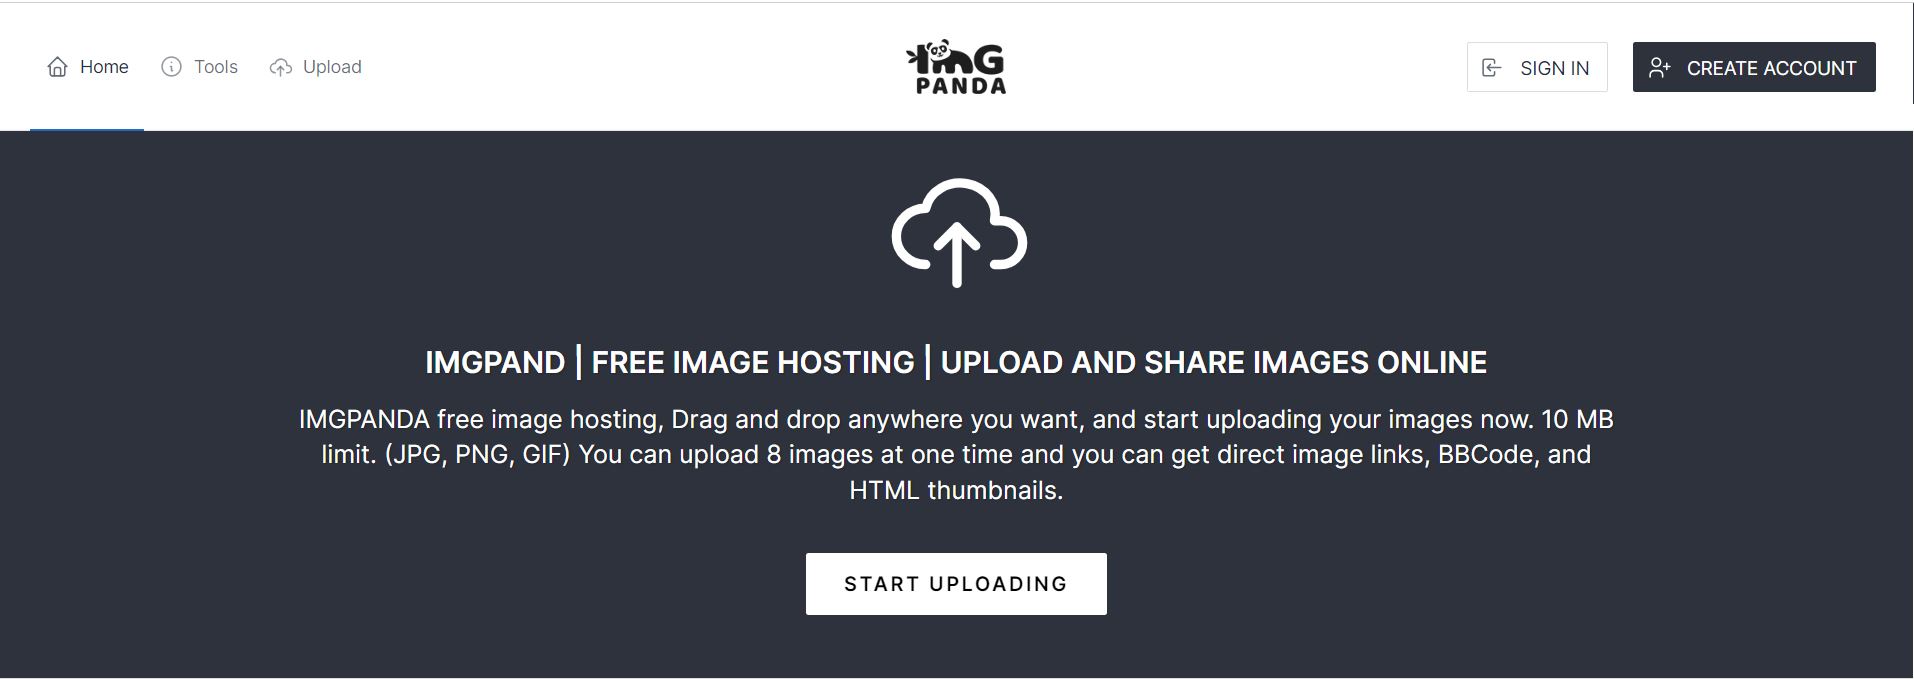 IMGPANDA - Free Image Hosting